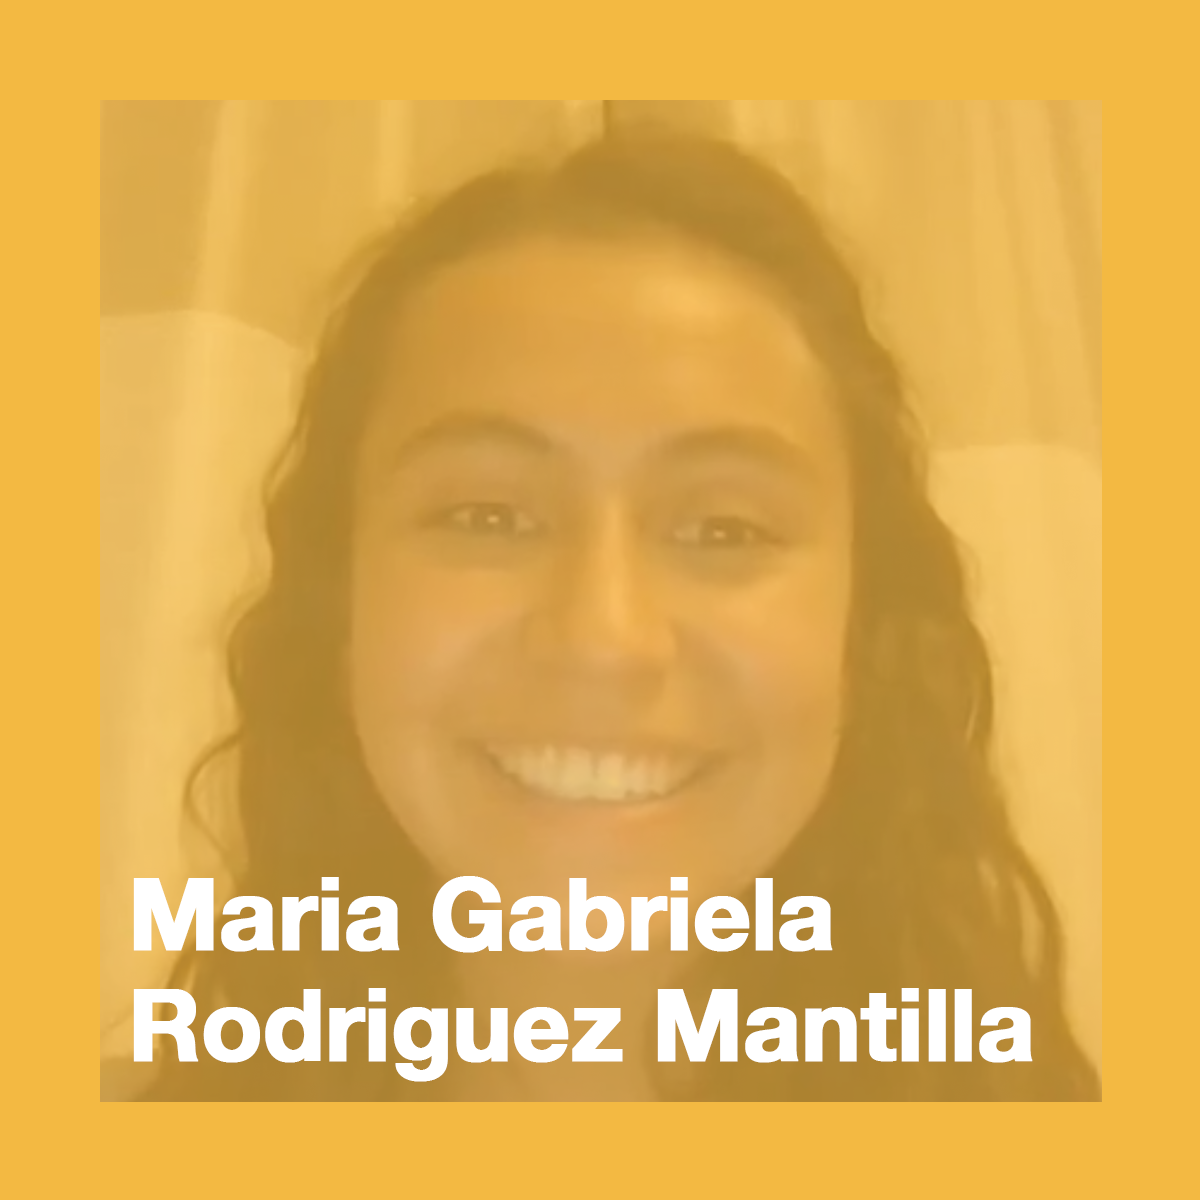 Maria Gabriela Rodriguez Mantilla, dental scholar. She is smiling at the camera.